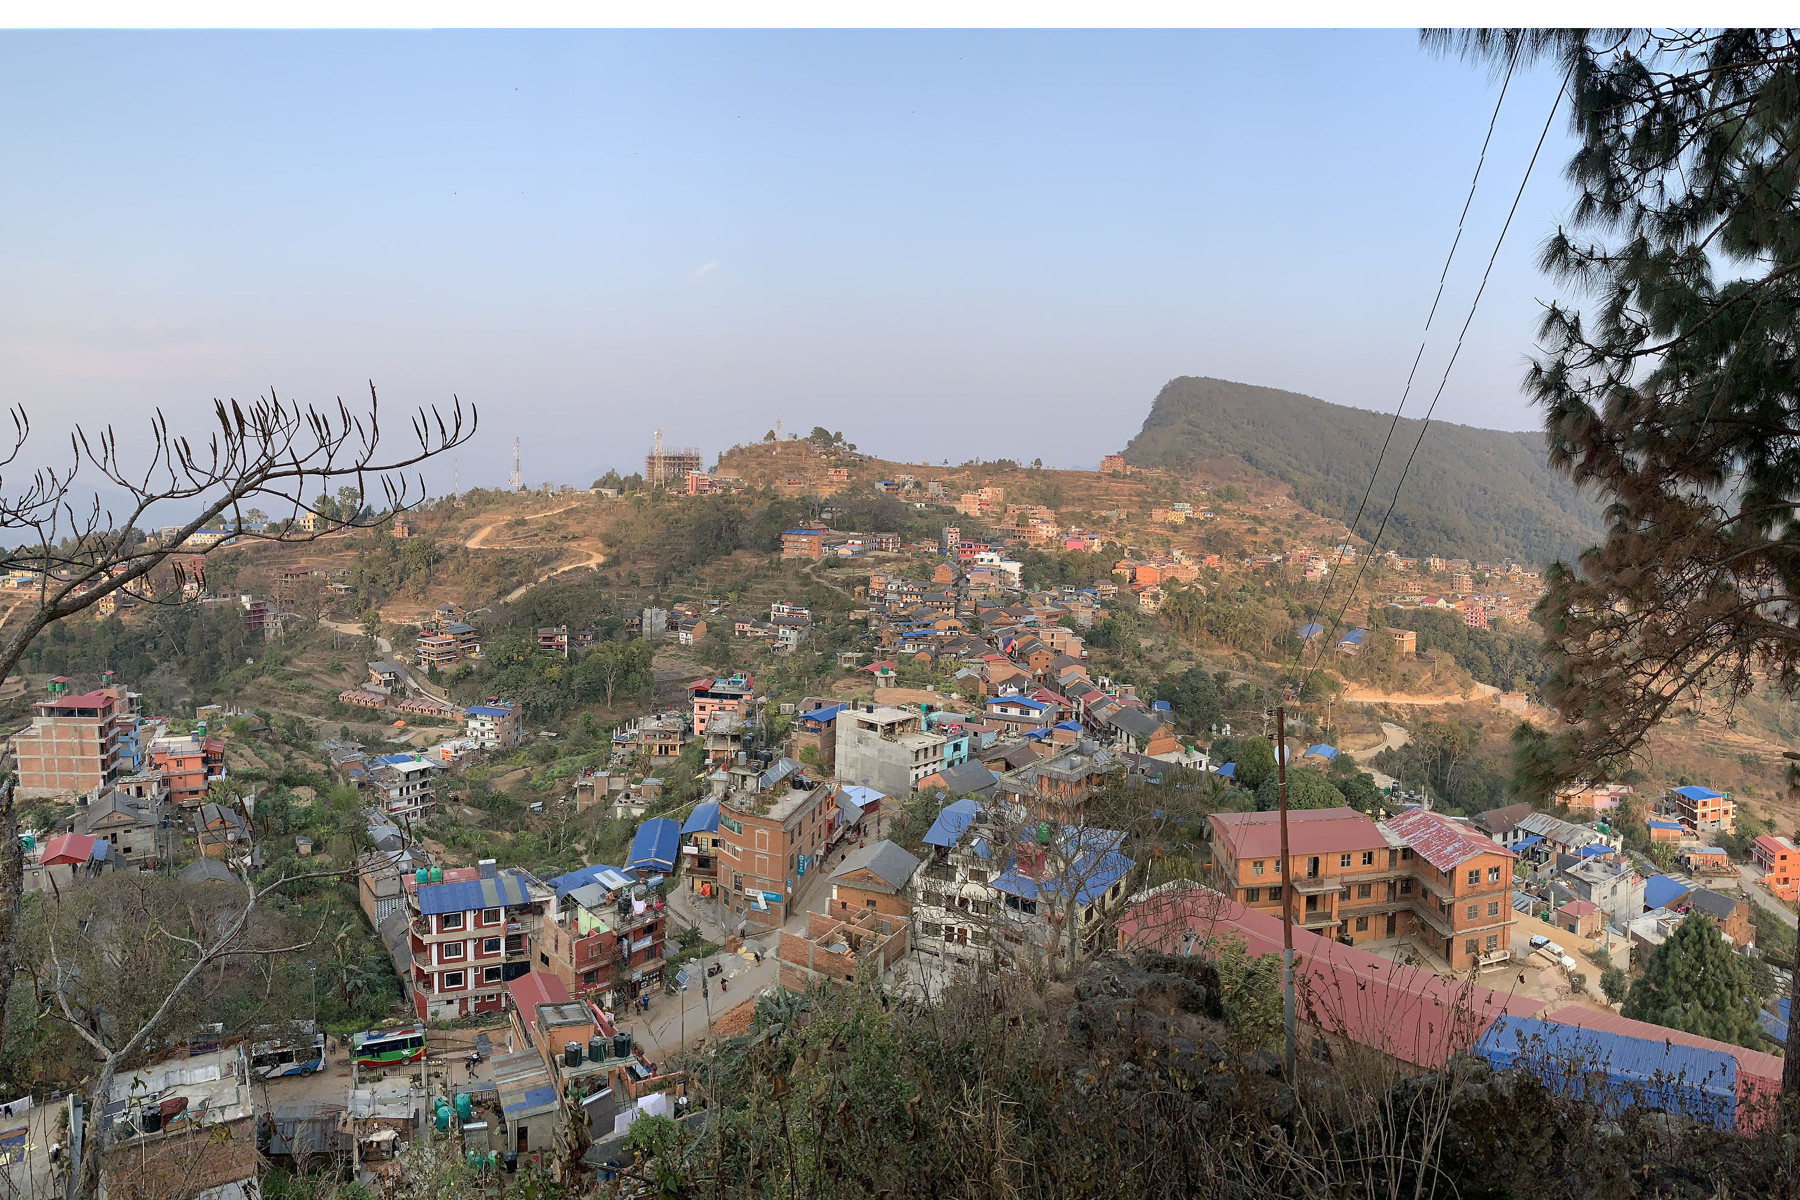 पहाडकी रानी नामले परिचित तनहुँको पर्यटकीय नगरी बन्दीपुर बजार । तस्बिर:कृष्ण न्यौपाने/रासस